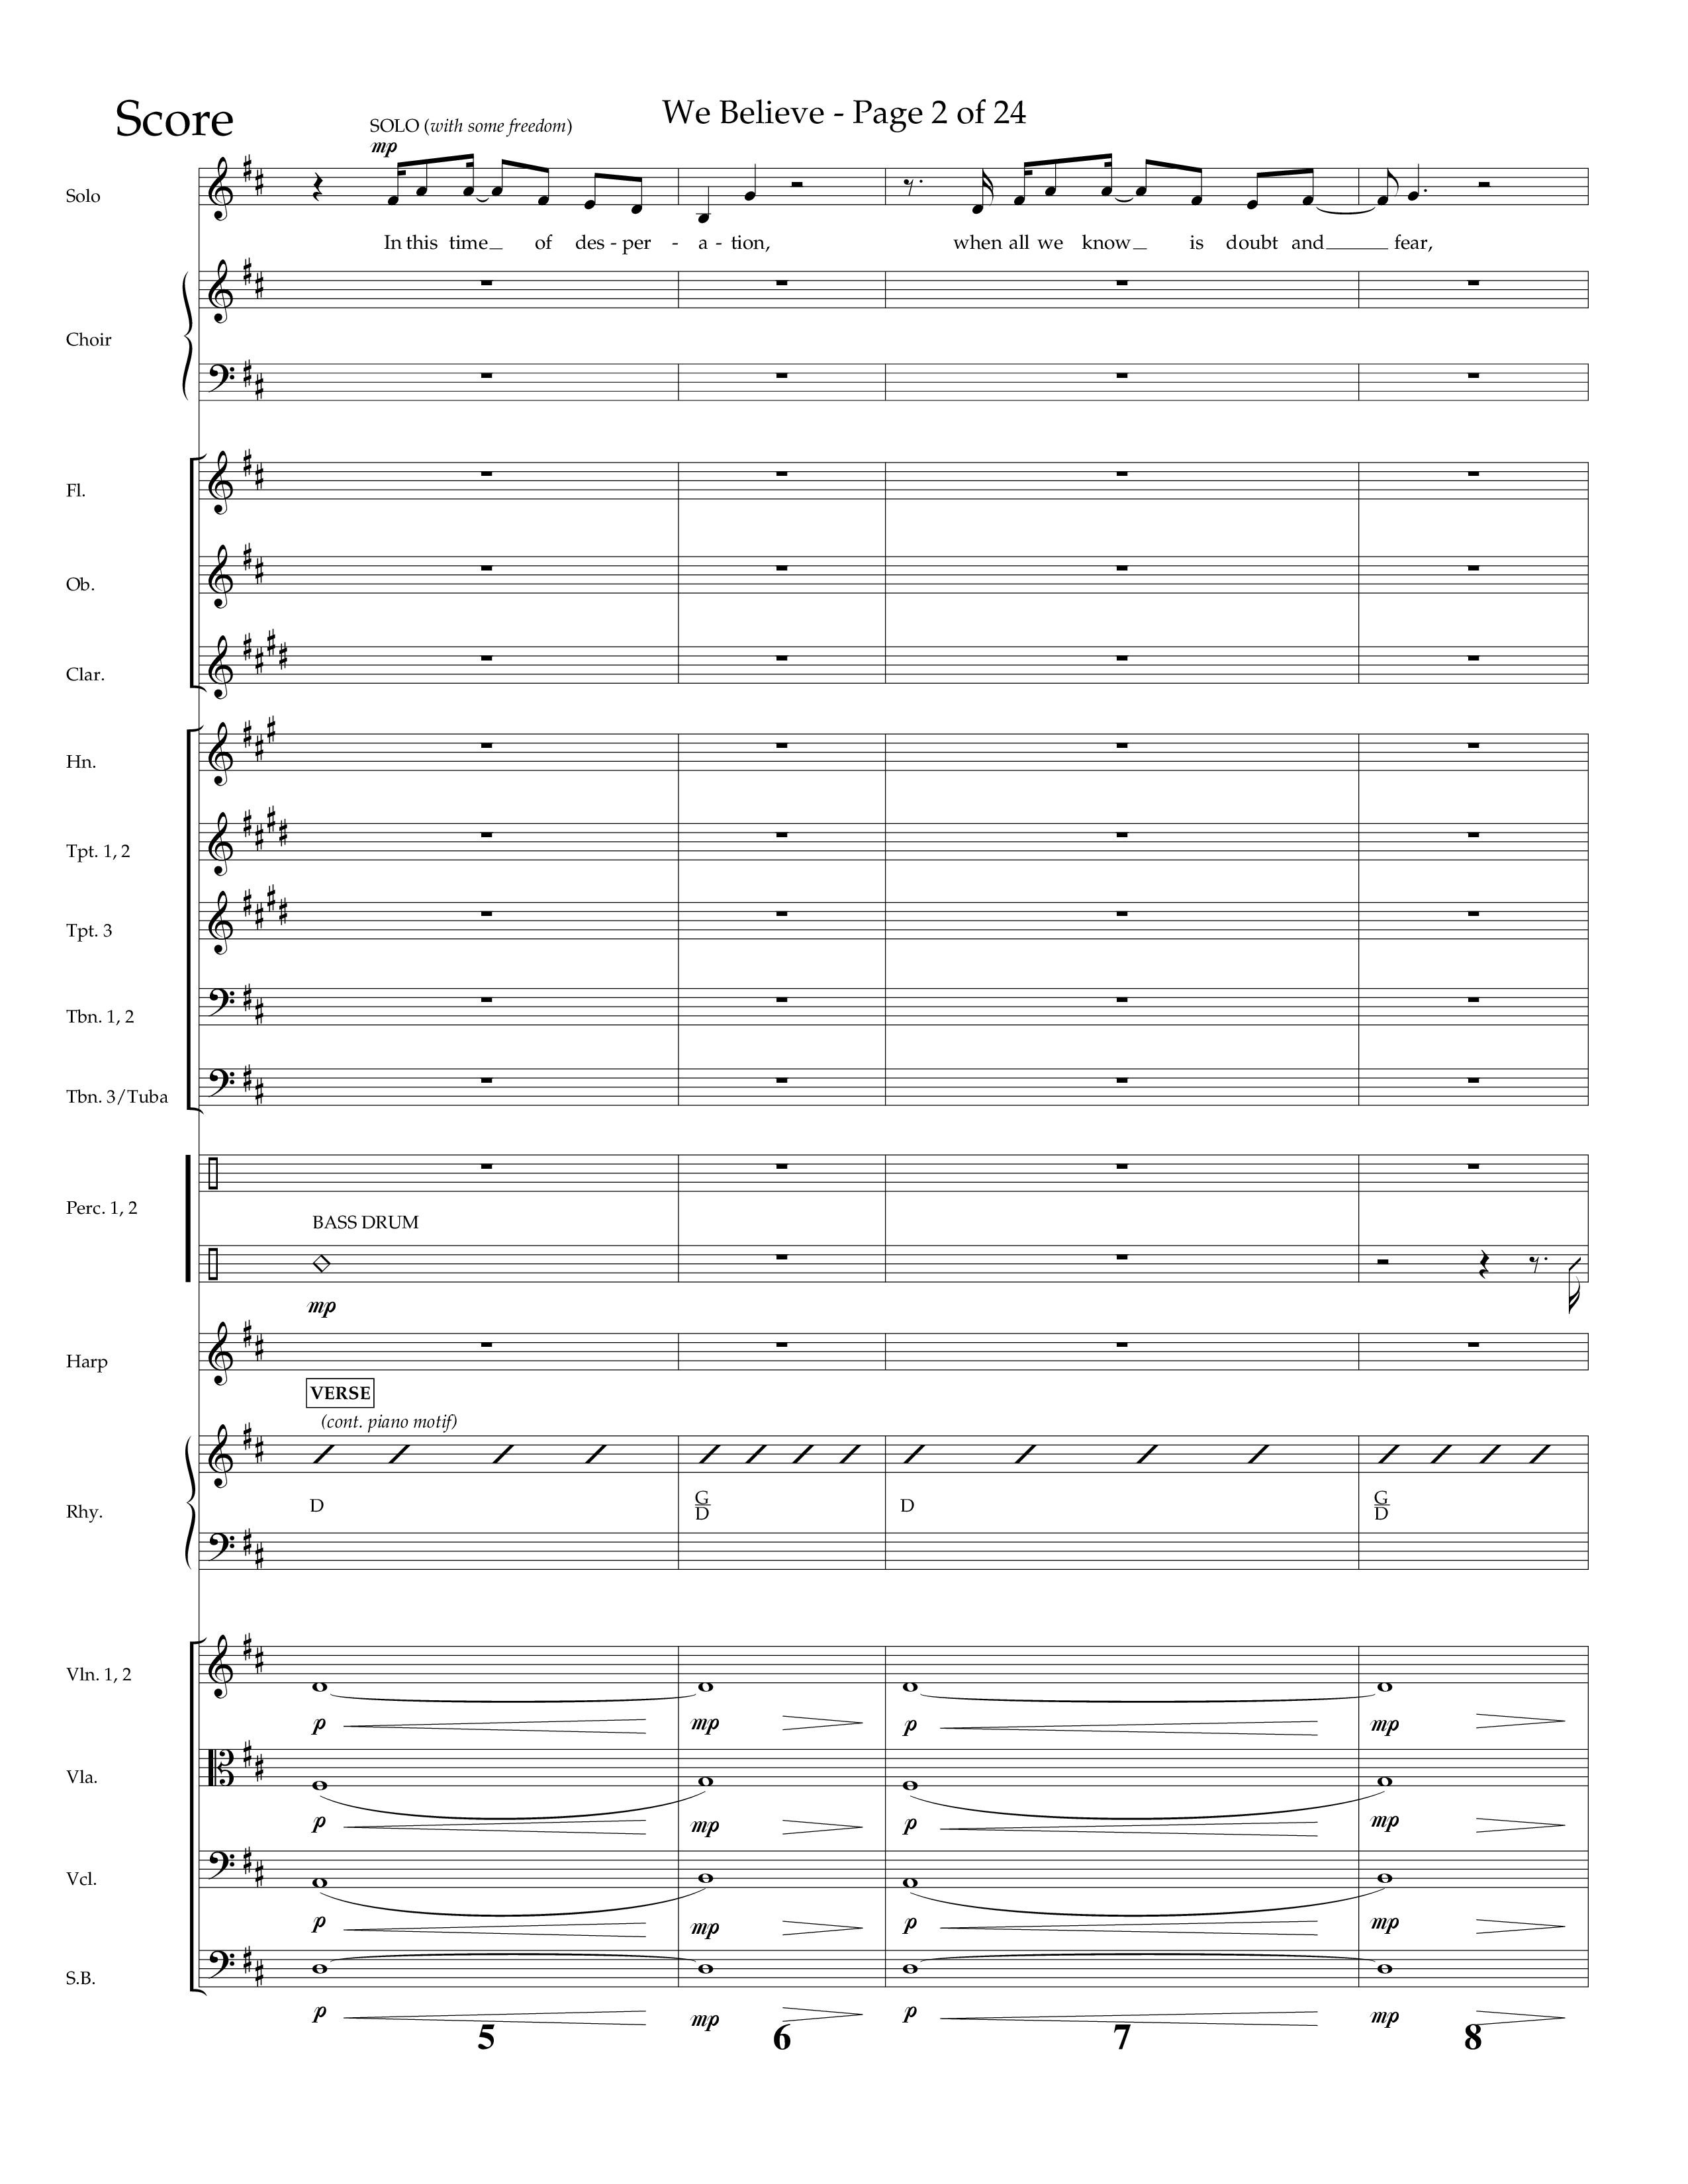 We Believe (Choral Anthem SATB) Conductor's Score (Lifeway Choral / Arr. Cliff Duren)